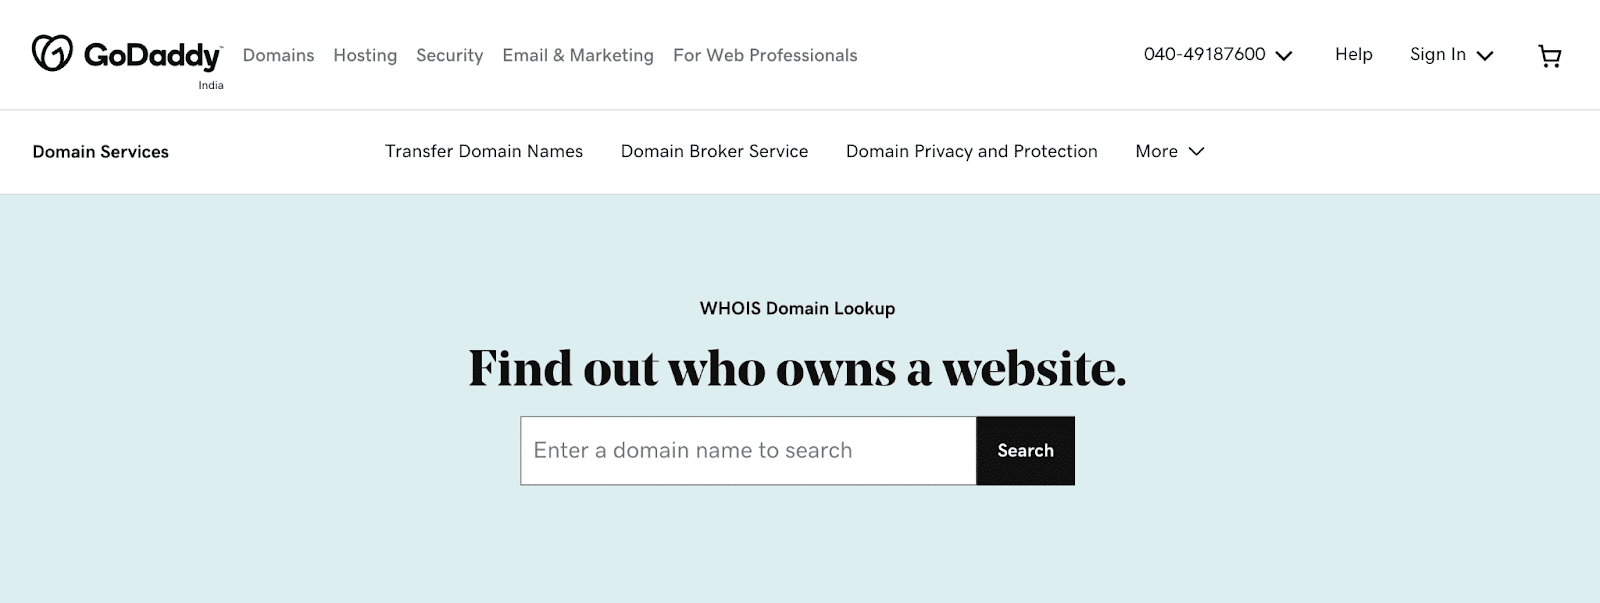 Pencarian Domain